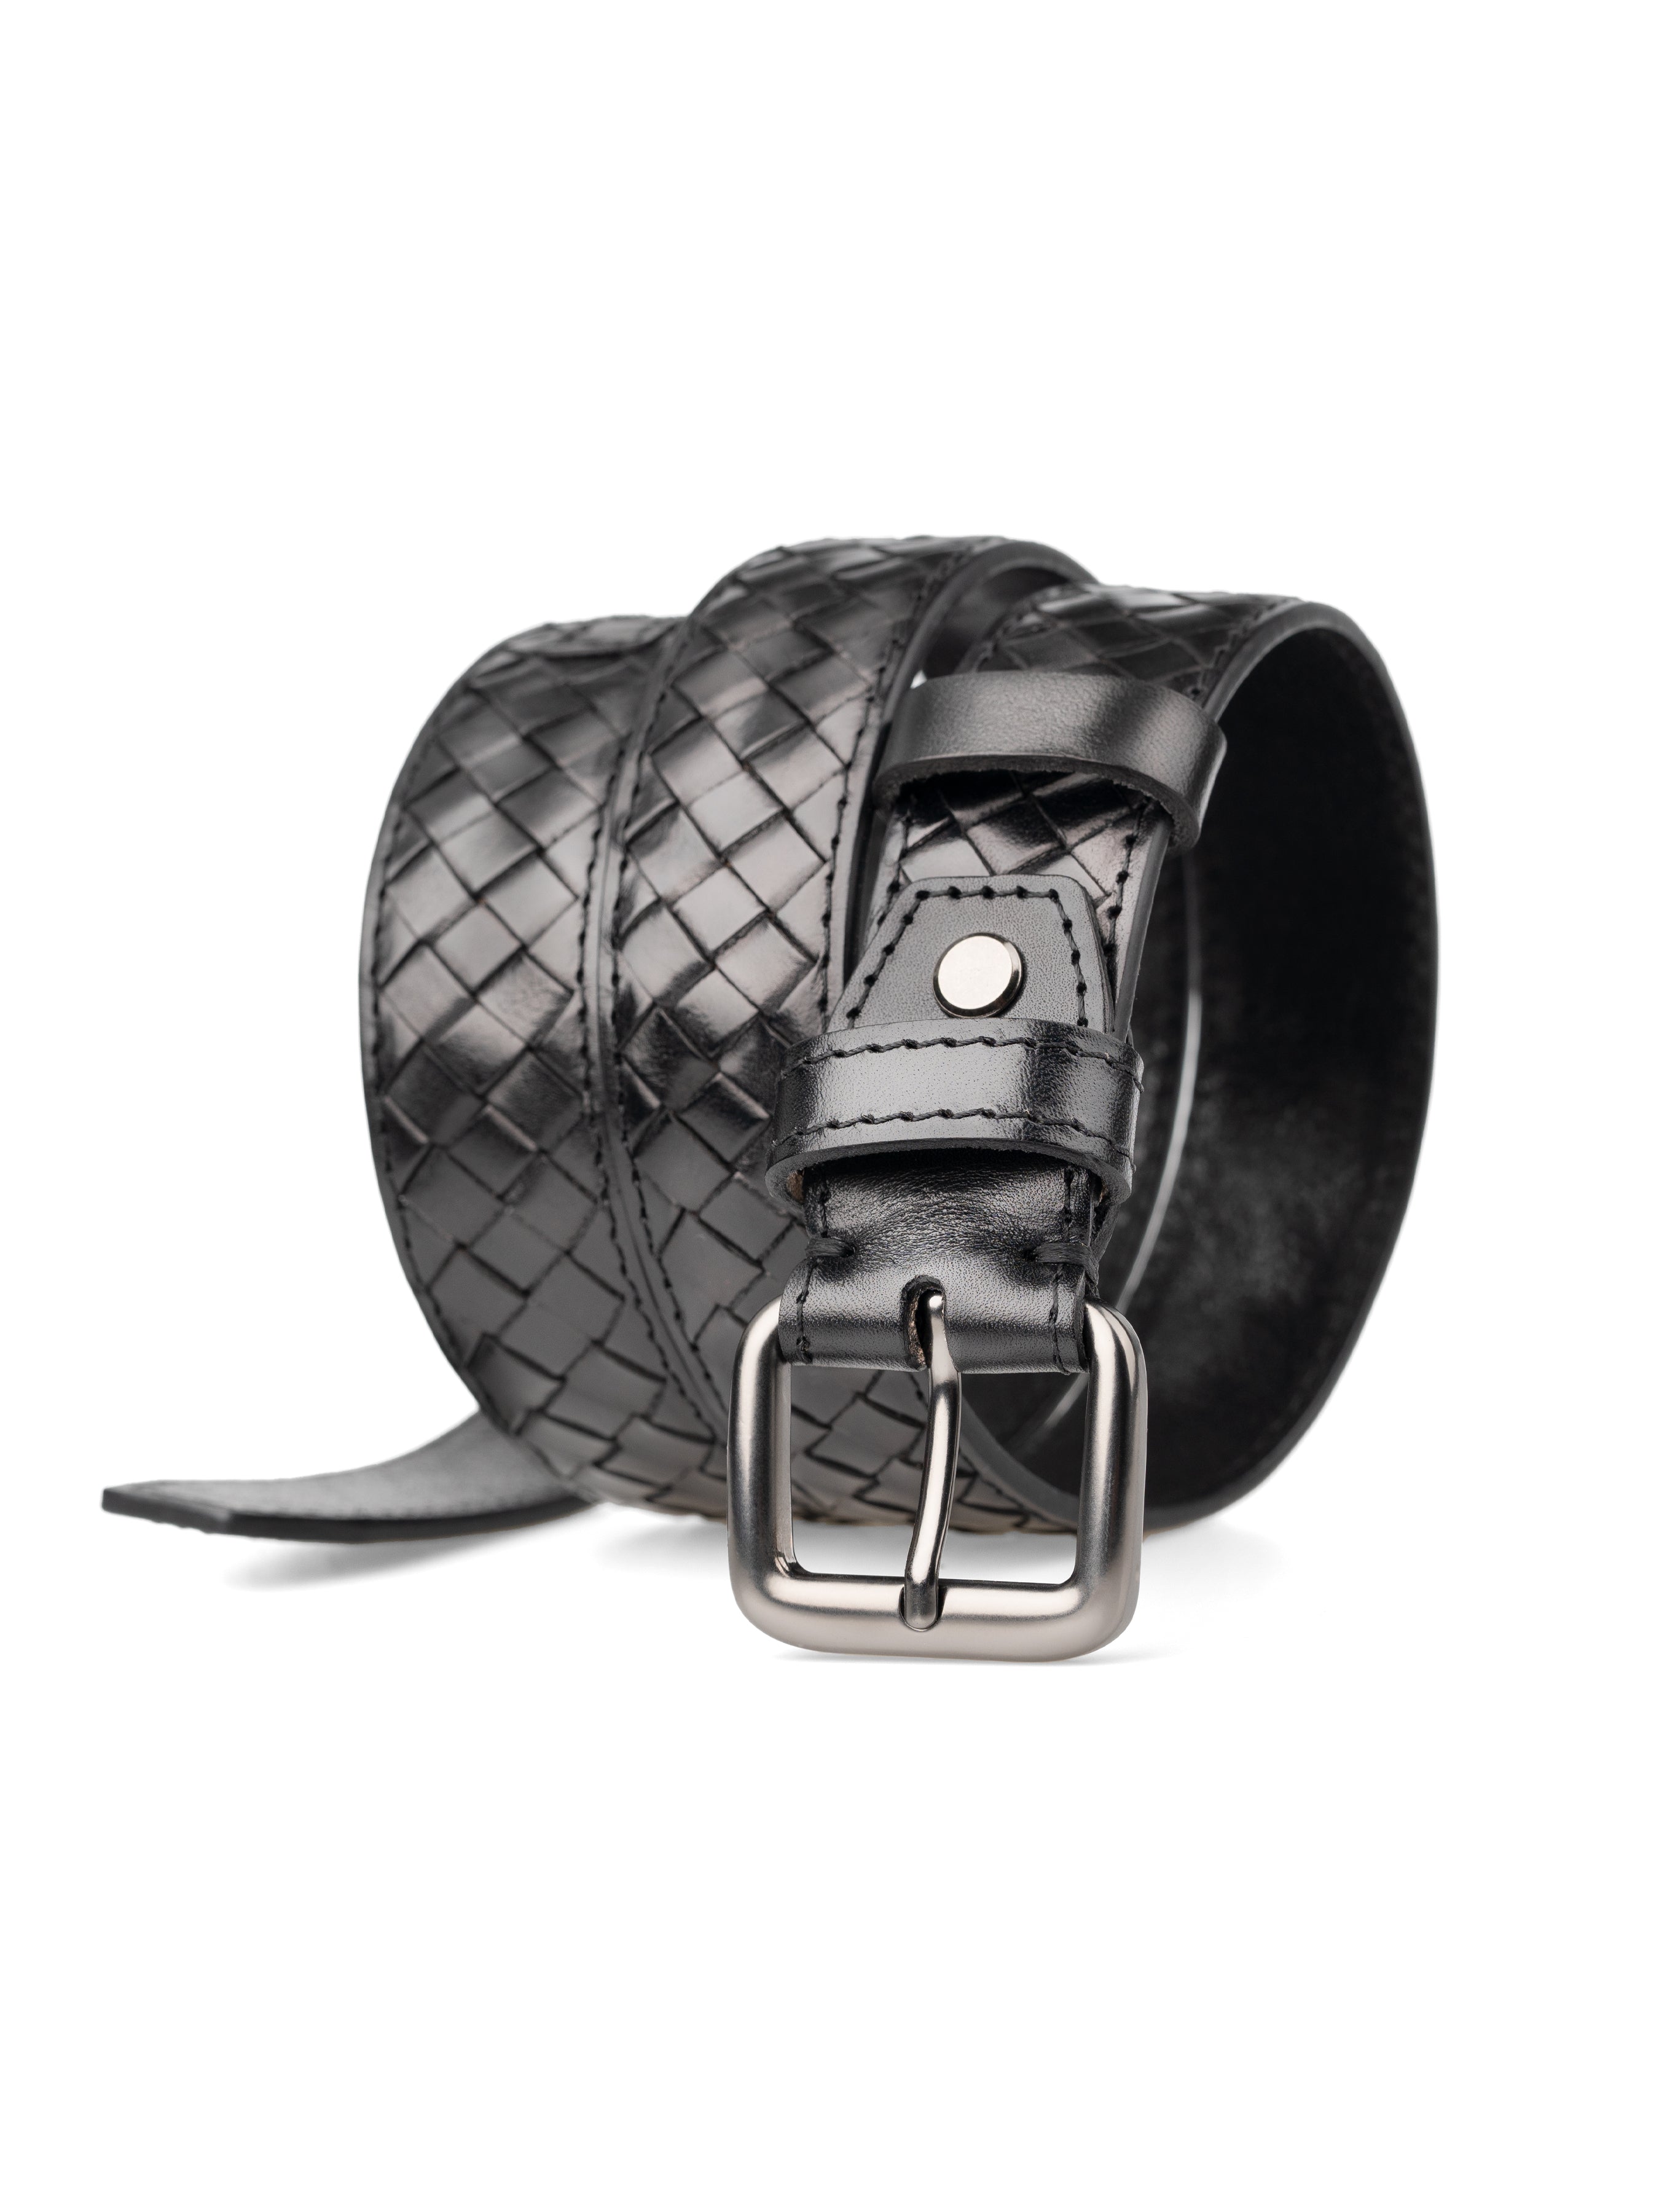 Woven Leather Belt - Black Gunmetal Buckle